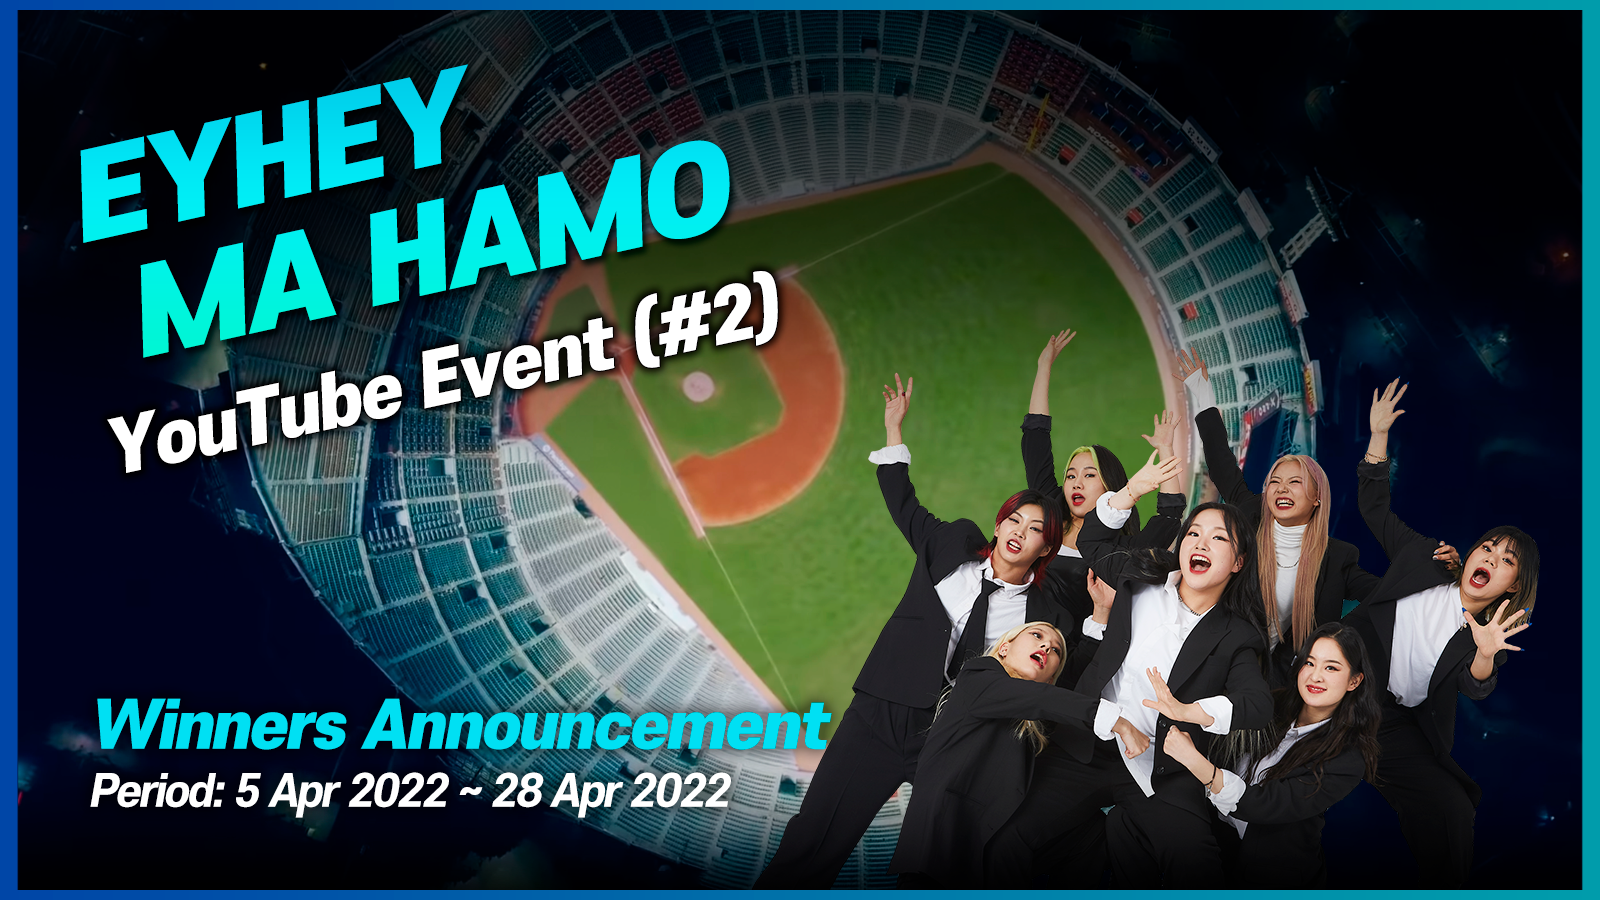 Winners Announcement : EYHEY MA HAMO YouTube Event (#2)